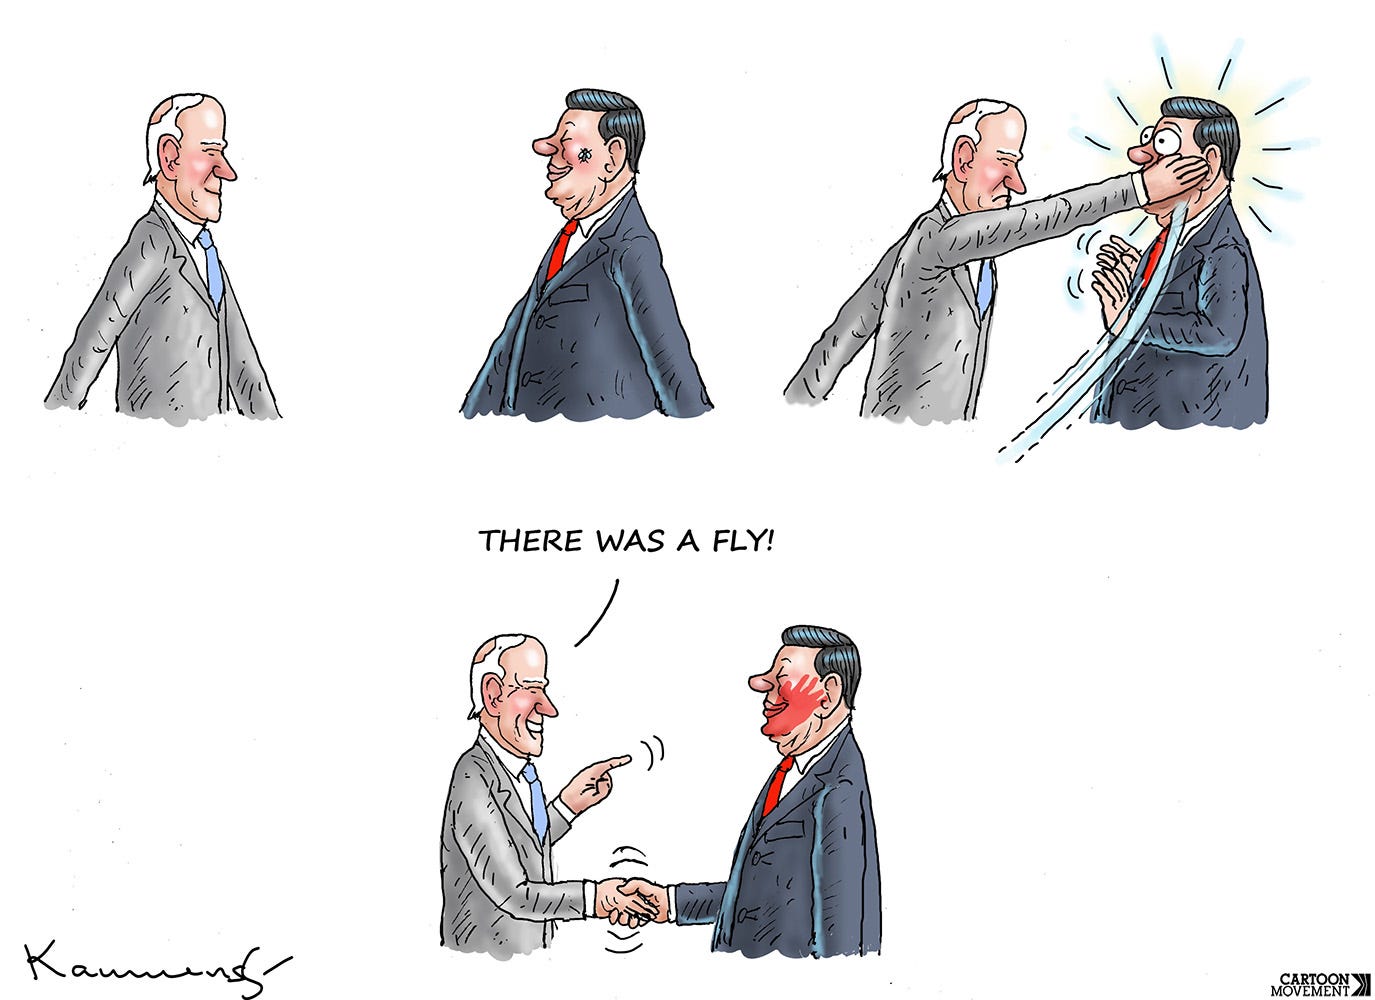 Cartoon showing Joe Biden meeting Xi Jinping in the first pane. Biden slaps Xi hard on the cheek in the second panel. In the third panel Biden explains: 'There was a fly!'